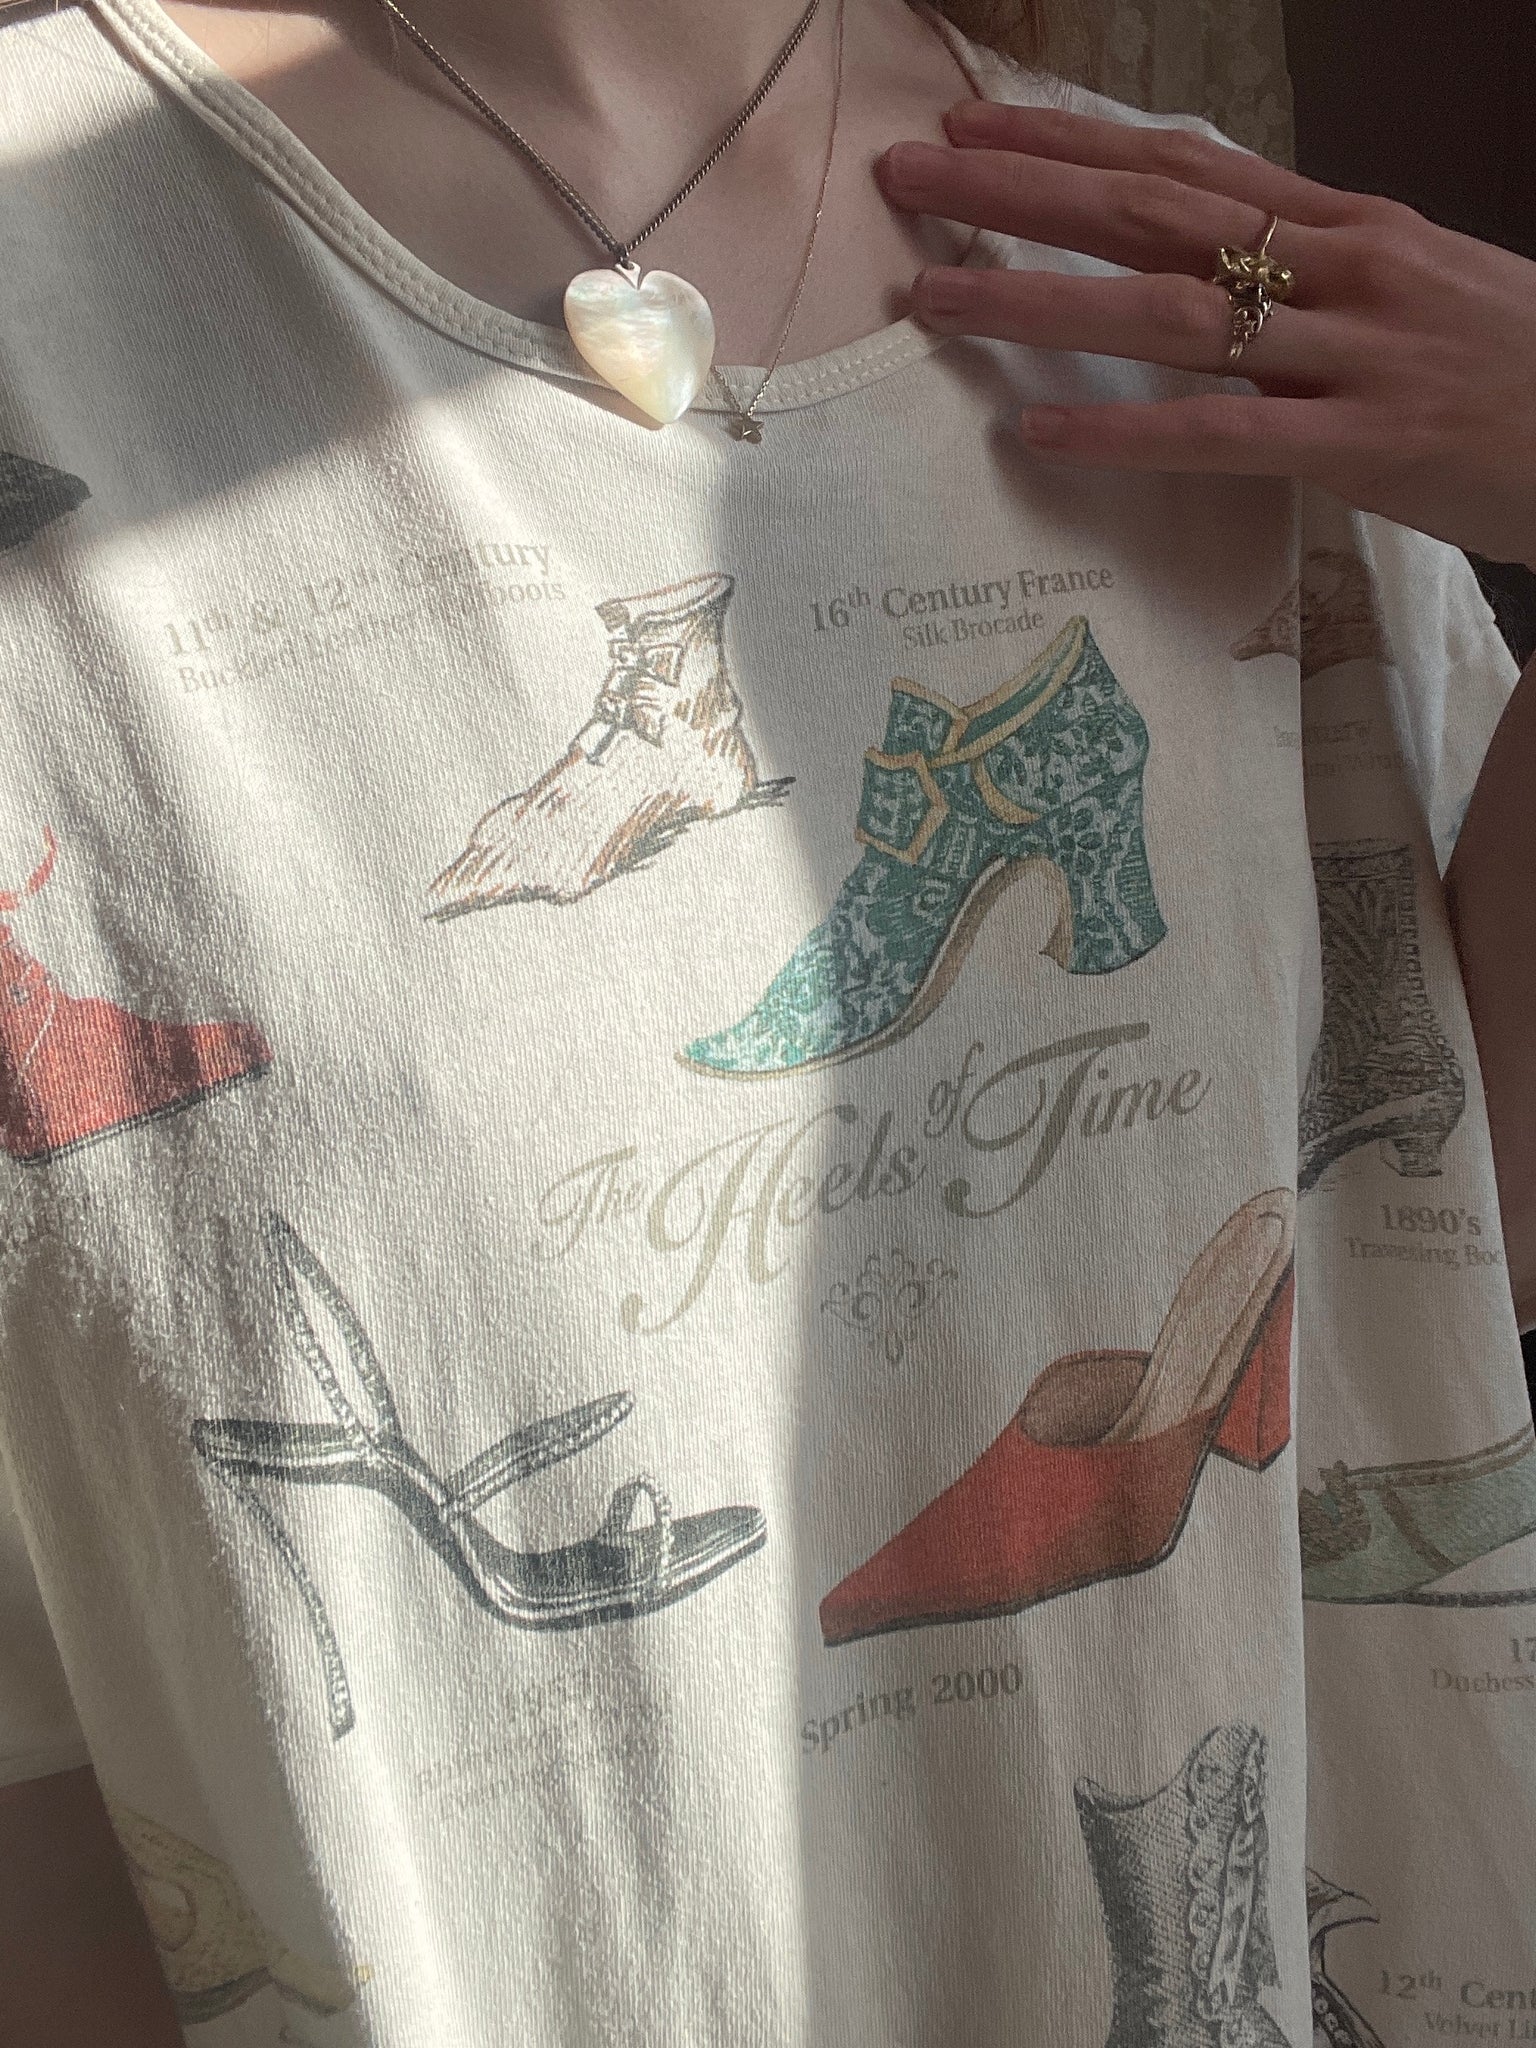 1990s Heels of Time Print Tee Shirt